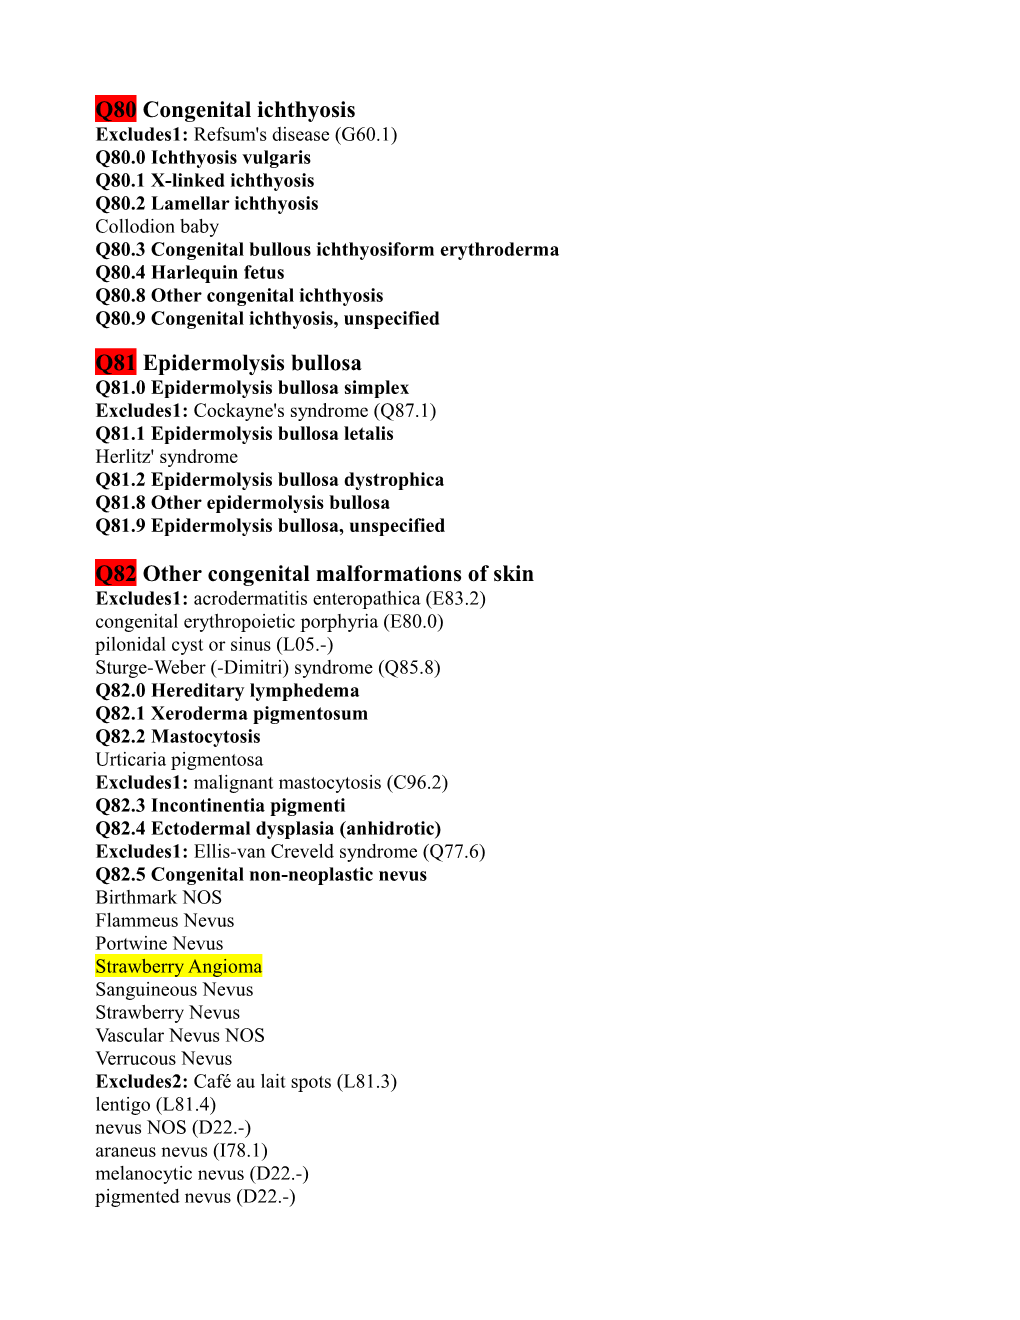 Q80 Congenital Ichthyosis Q81 Epidermolysis Bullosa Q82 Other